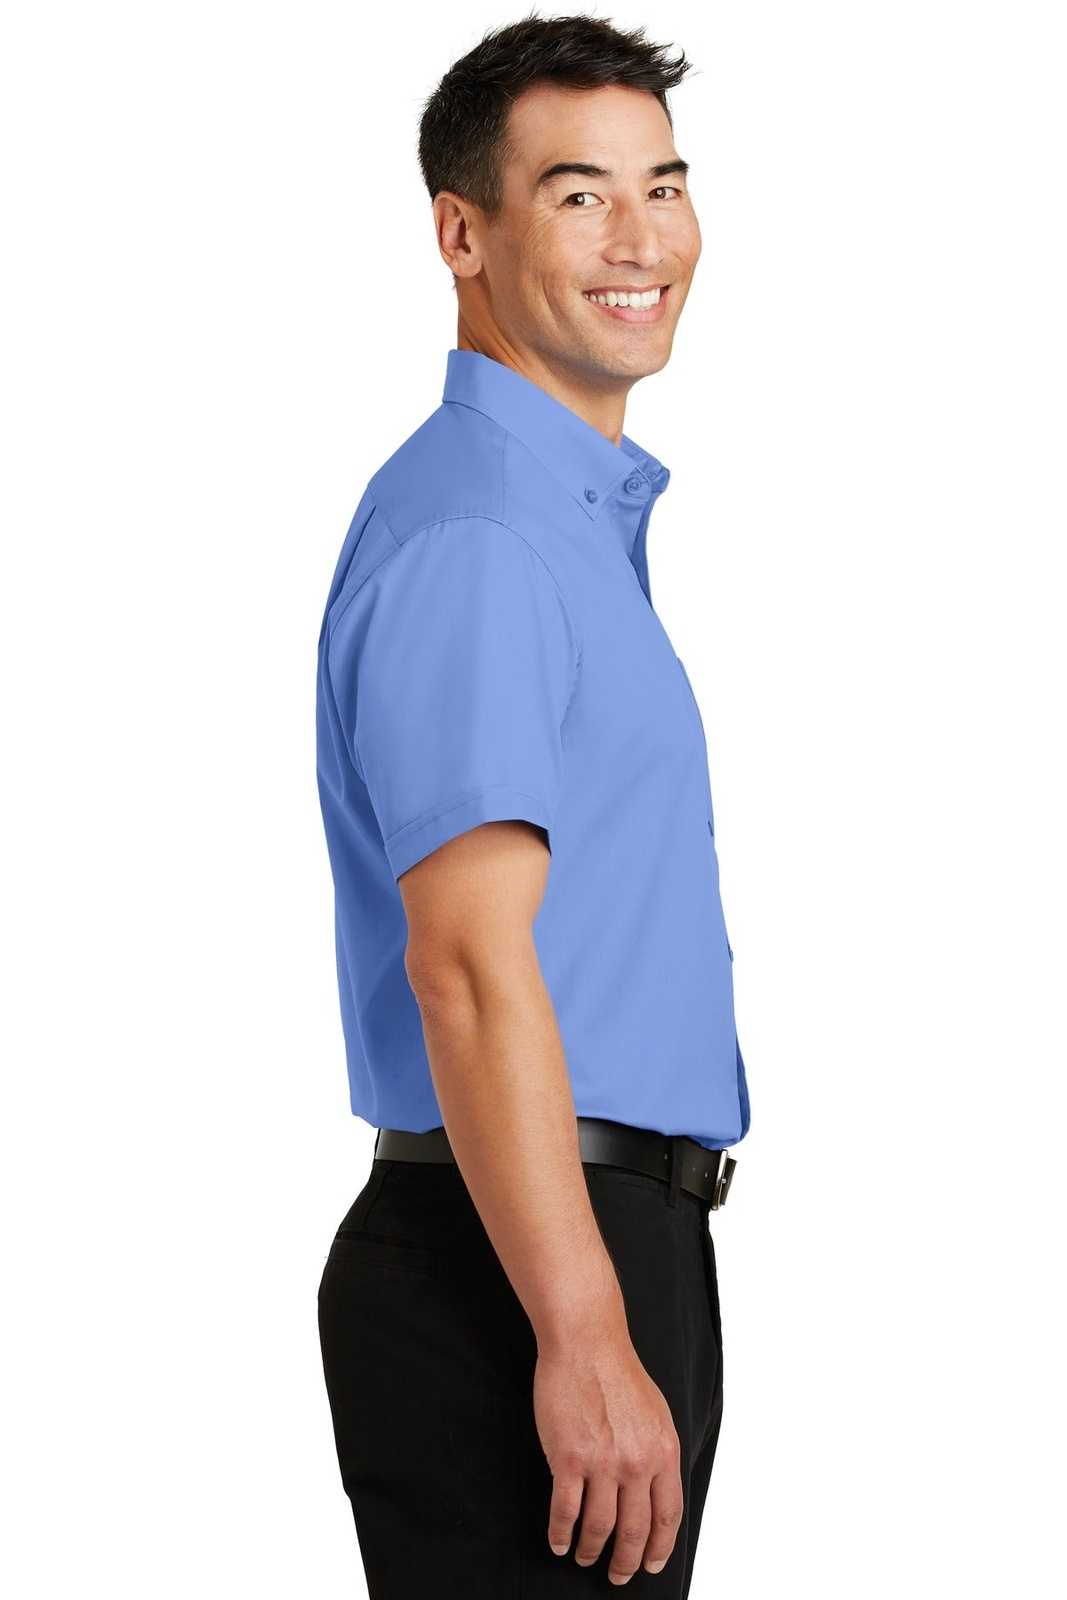 Port Authority S664 Short Sleeve Superpro Twill Shirt - Ultramarine Blue - HIT a Double - 3